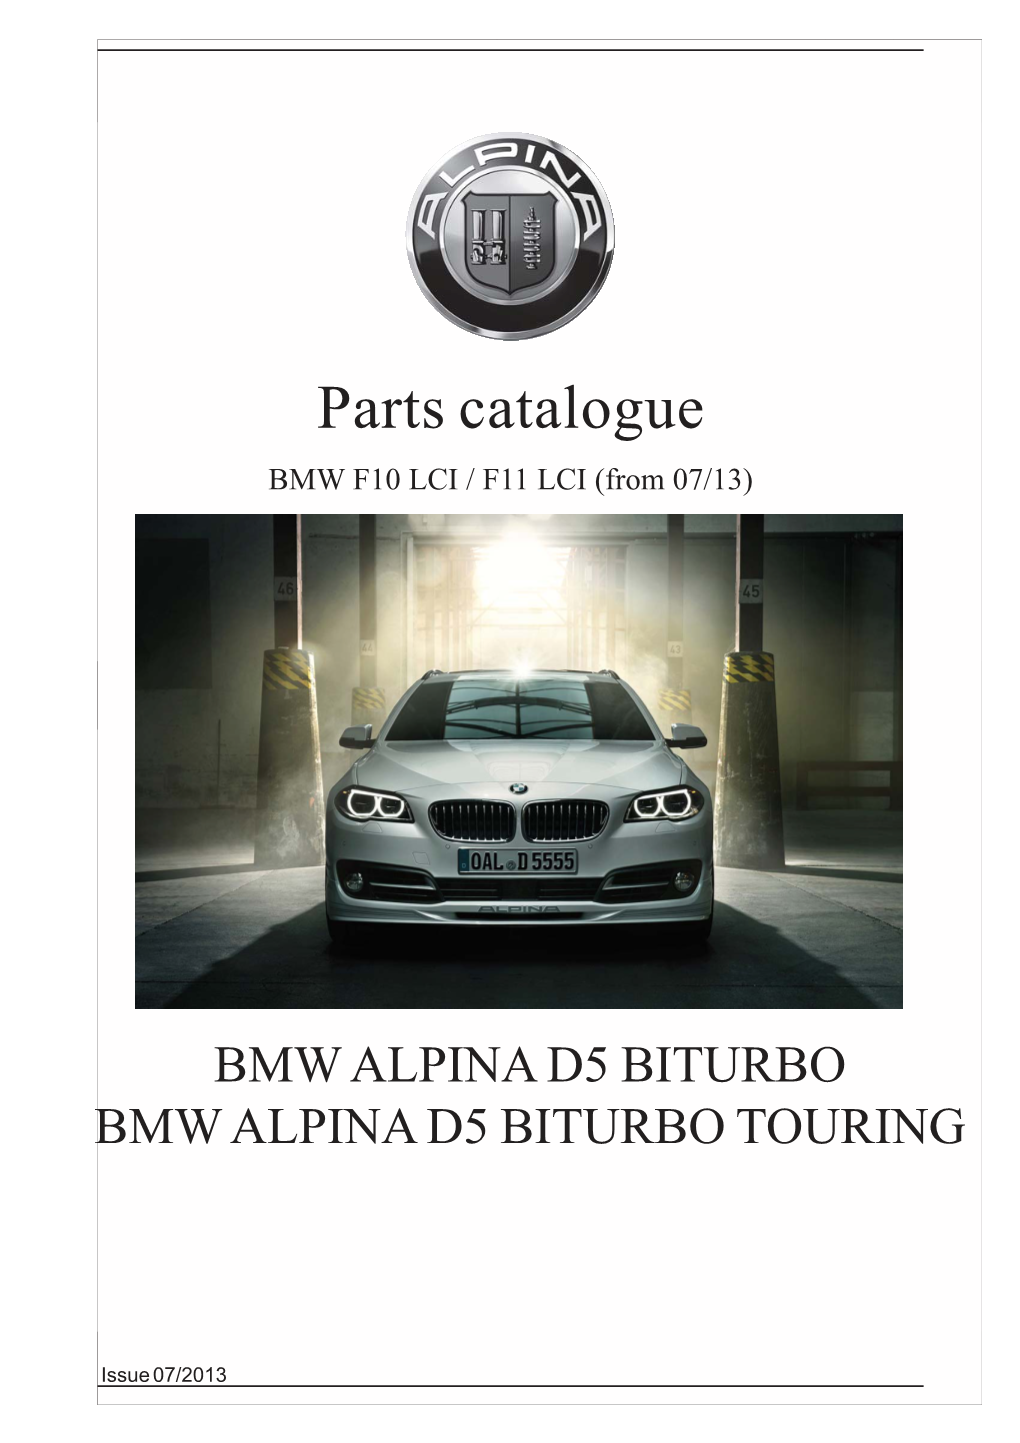 Parts Catalogue BMW F10 LCI / F11 LCI (From 07/13)